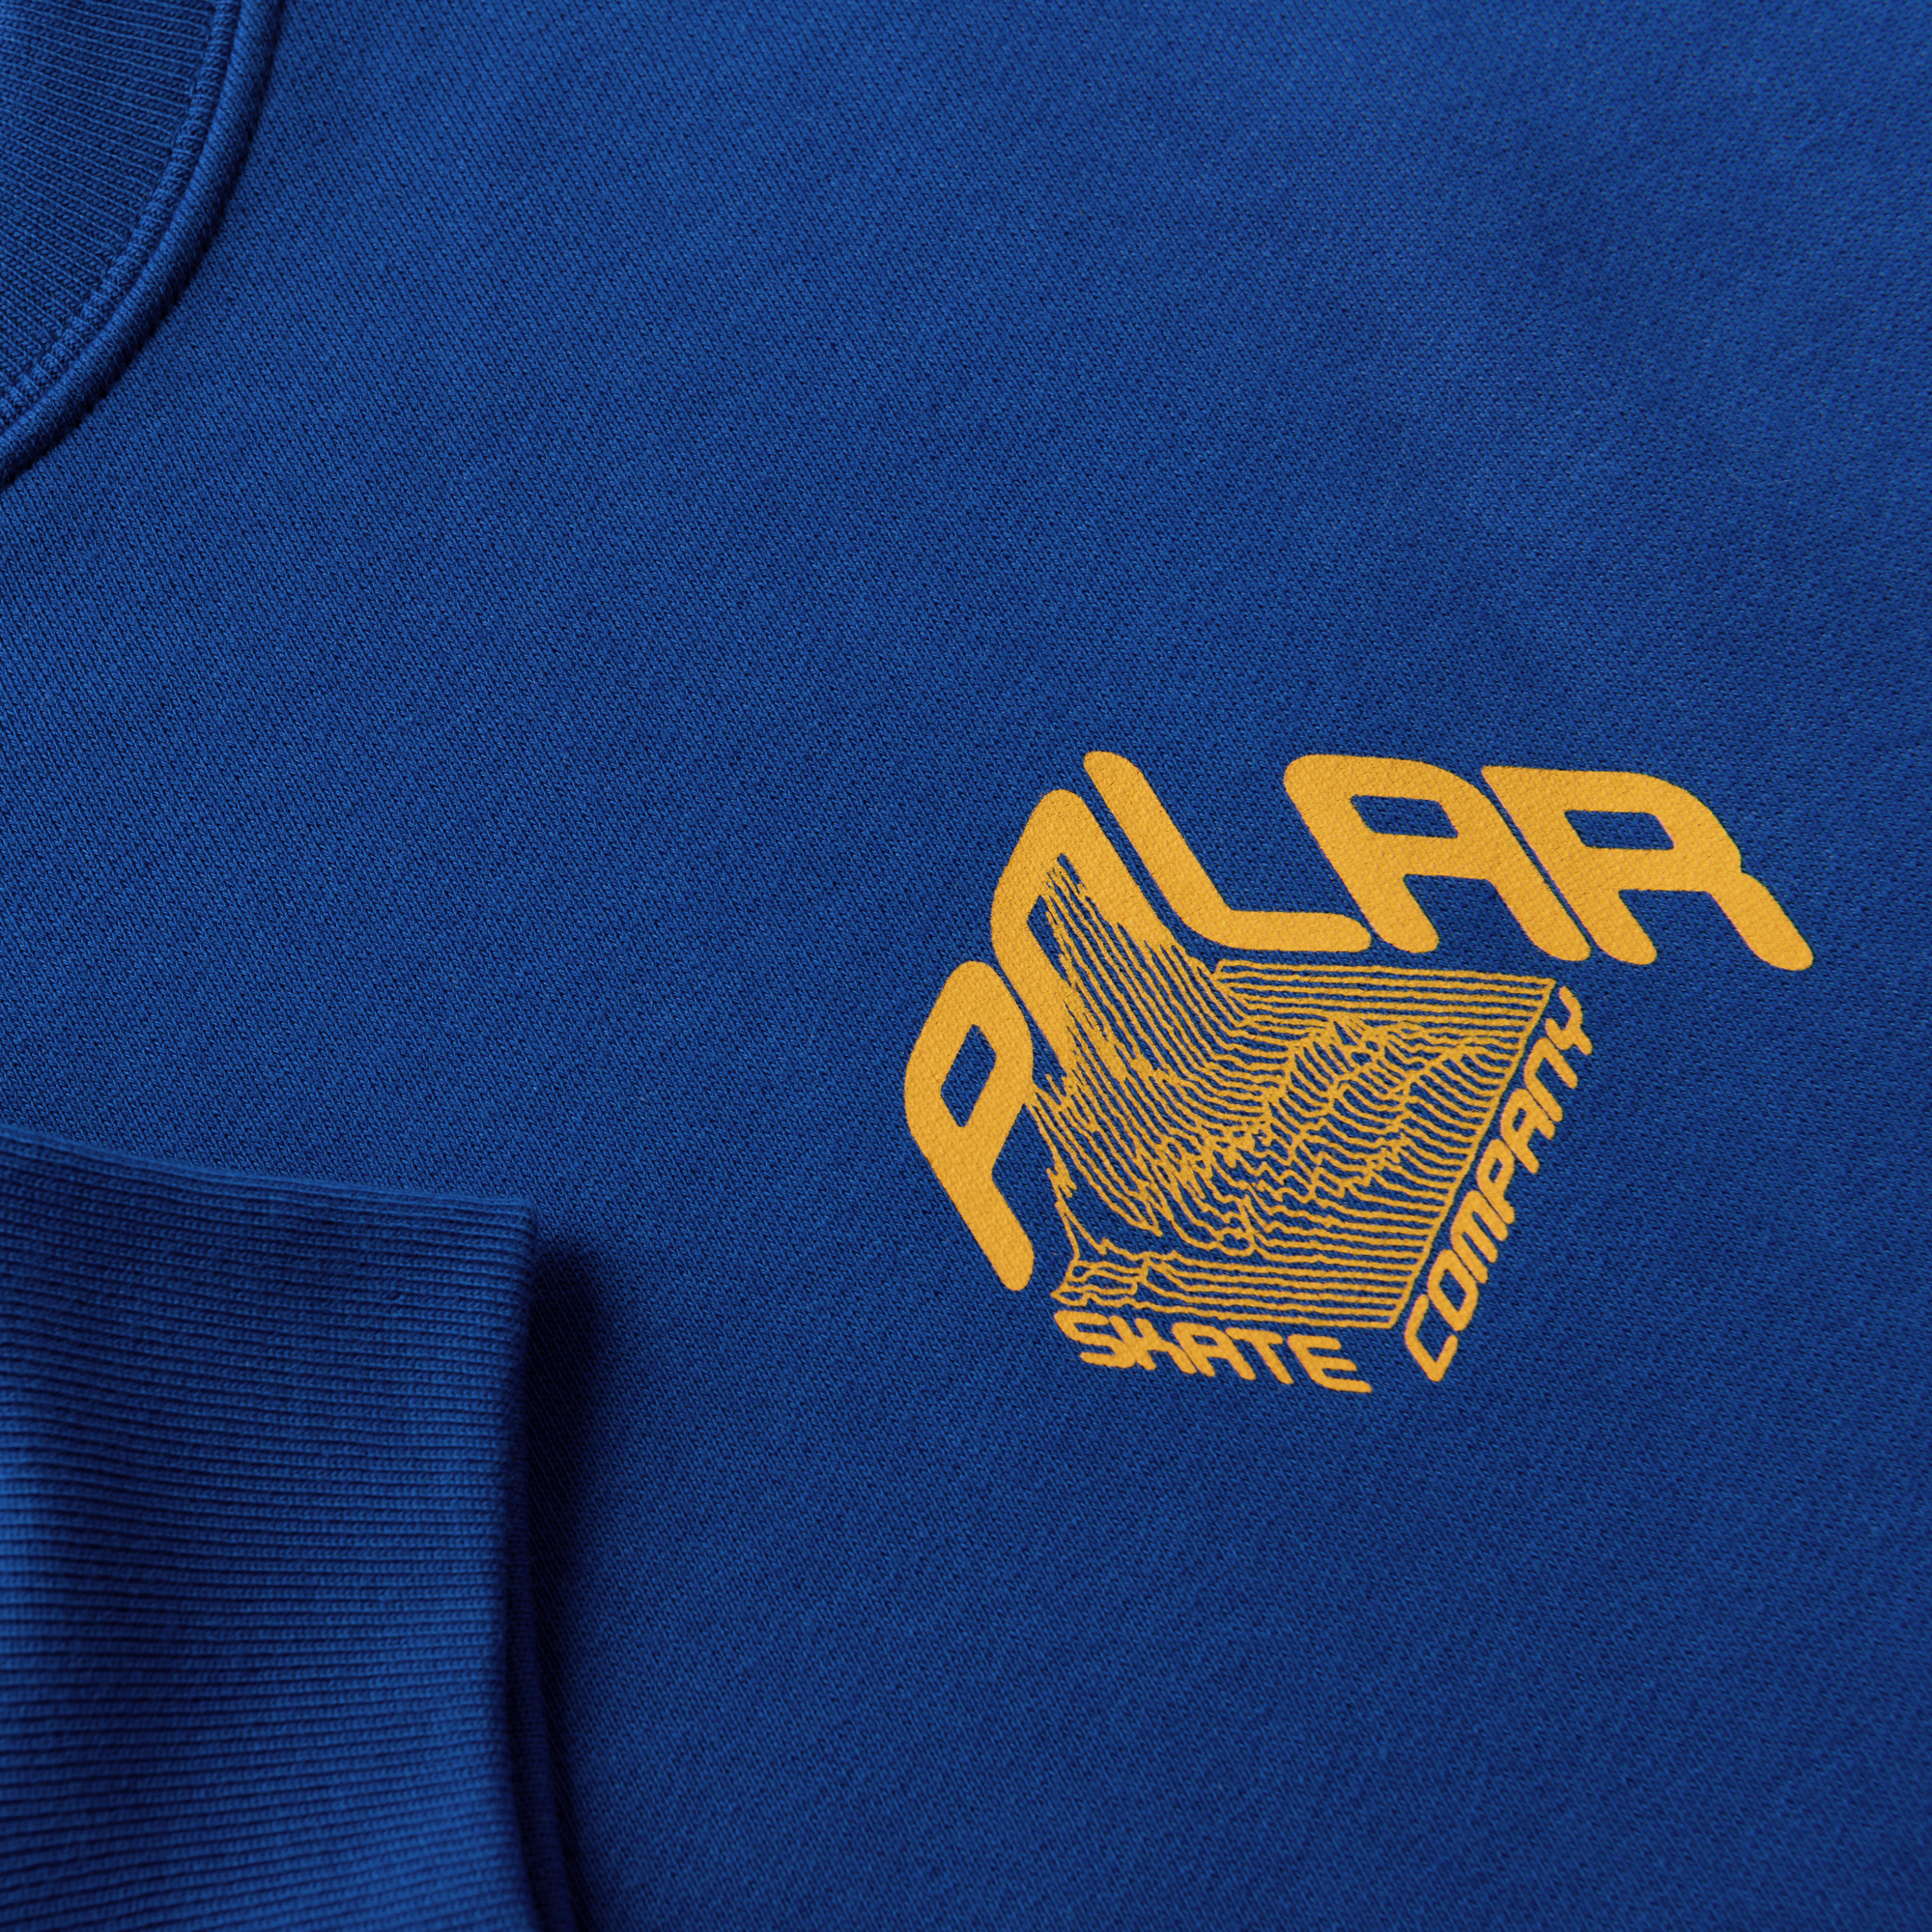 Deep blue polar Crewneck sweatshirt with orange logo on front. Free uk shipping on orders over £50